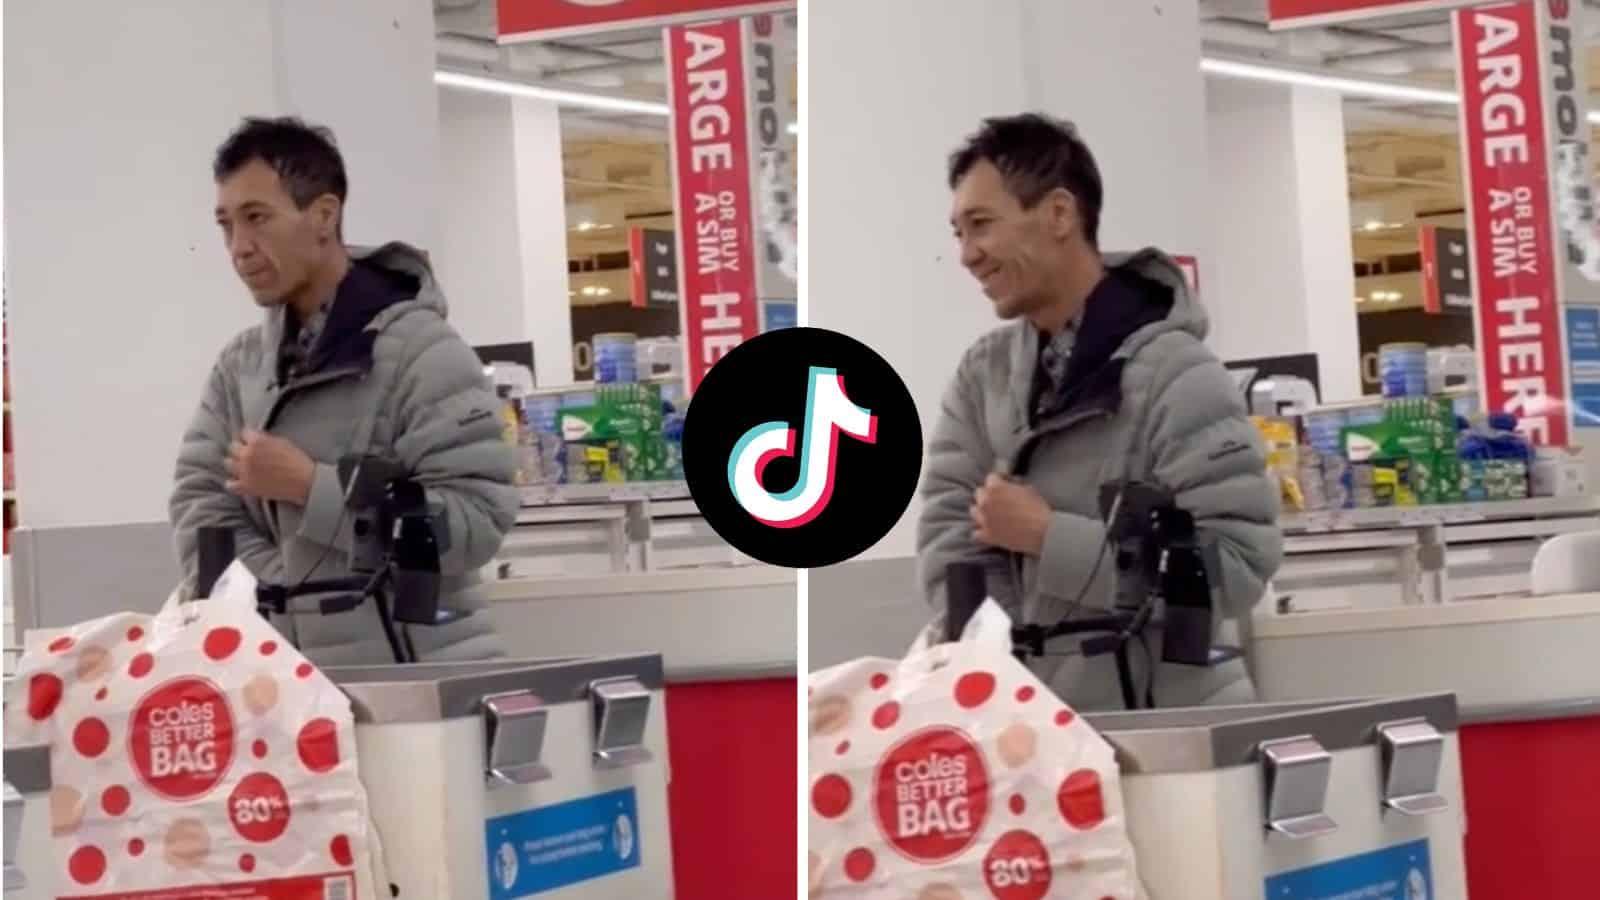 Stranger pays for man's groceries